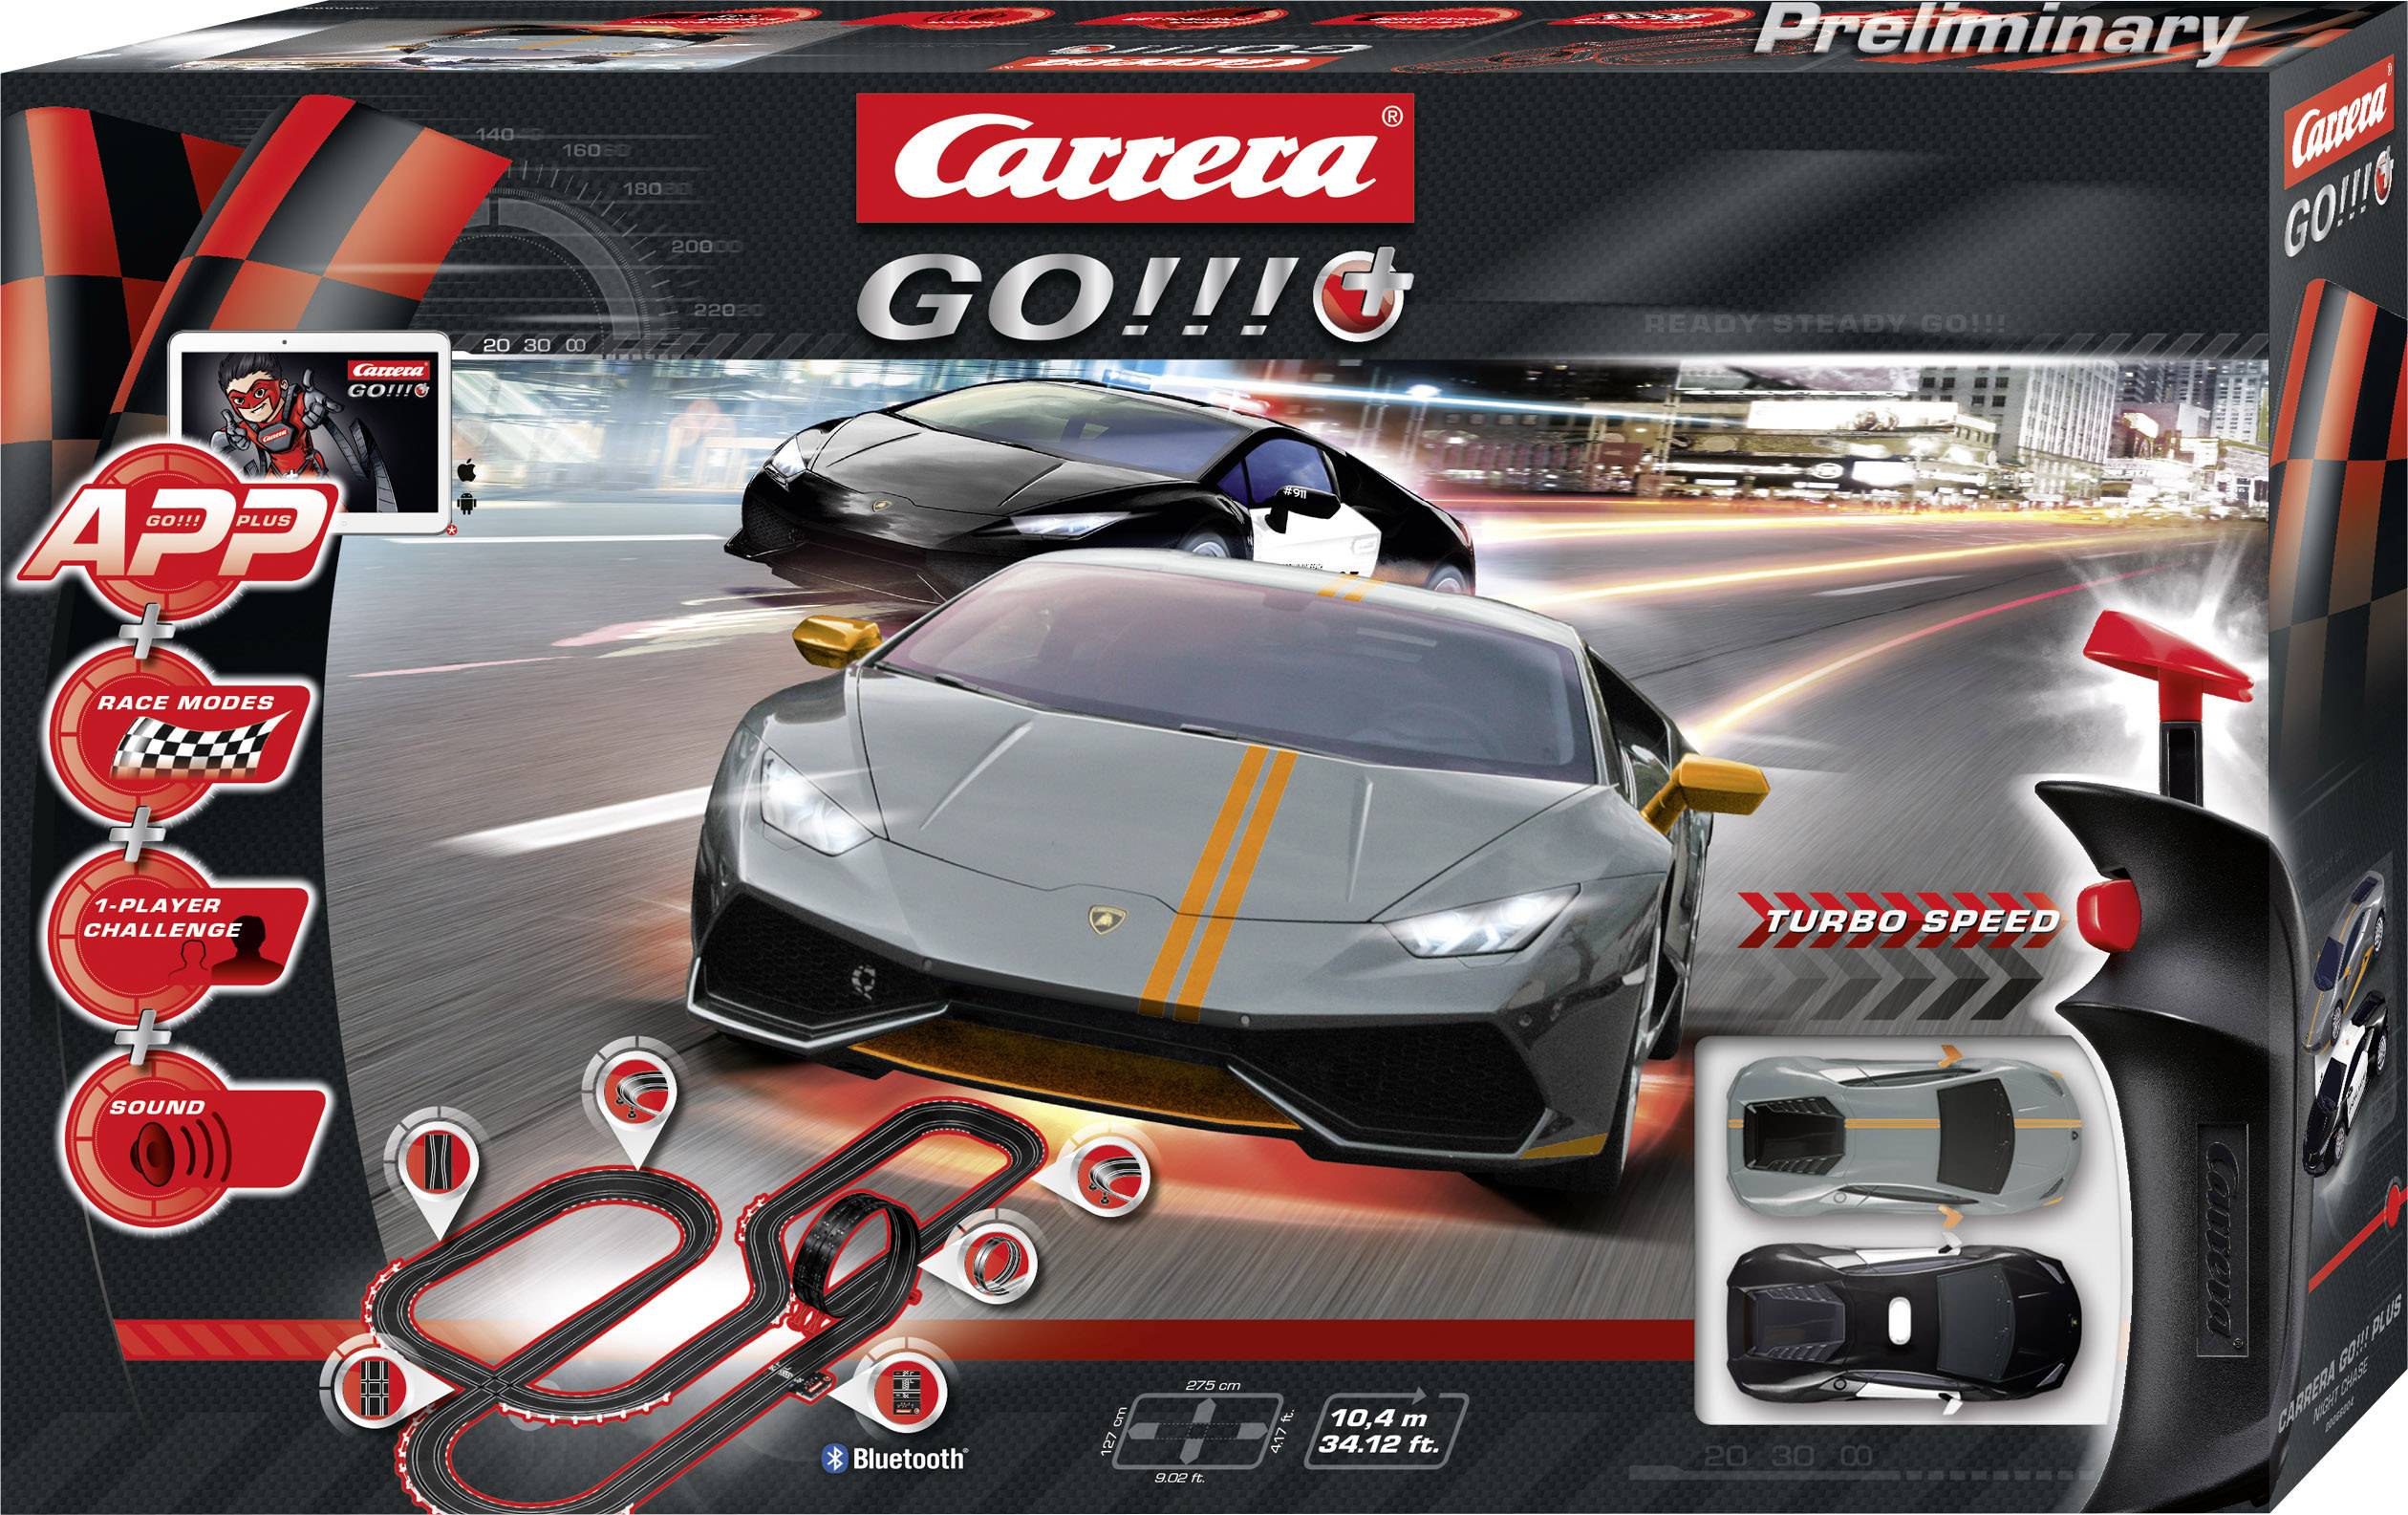 Carrera 20066004 GO!!! Night Chase Starter kit 